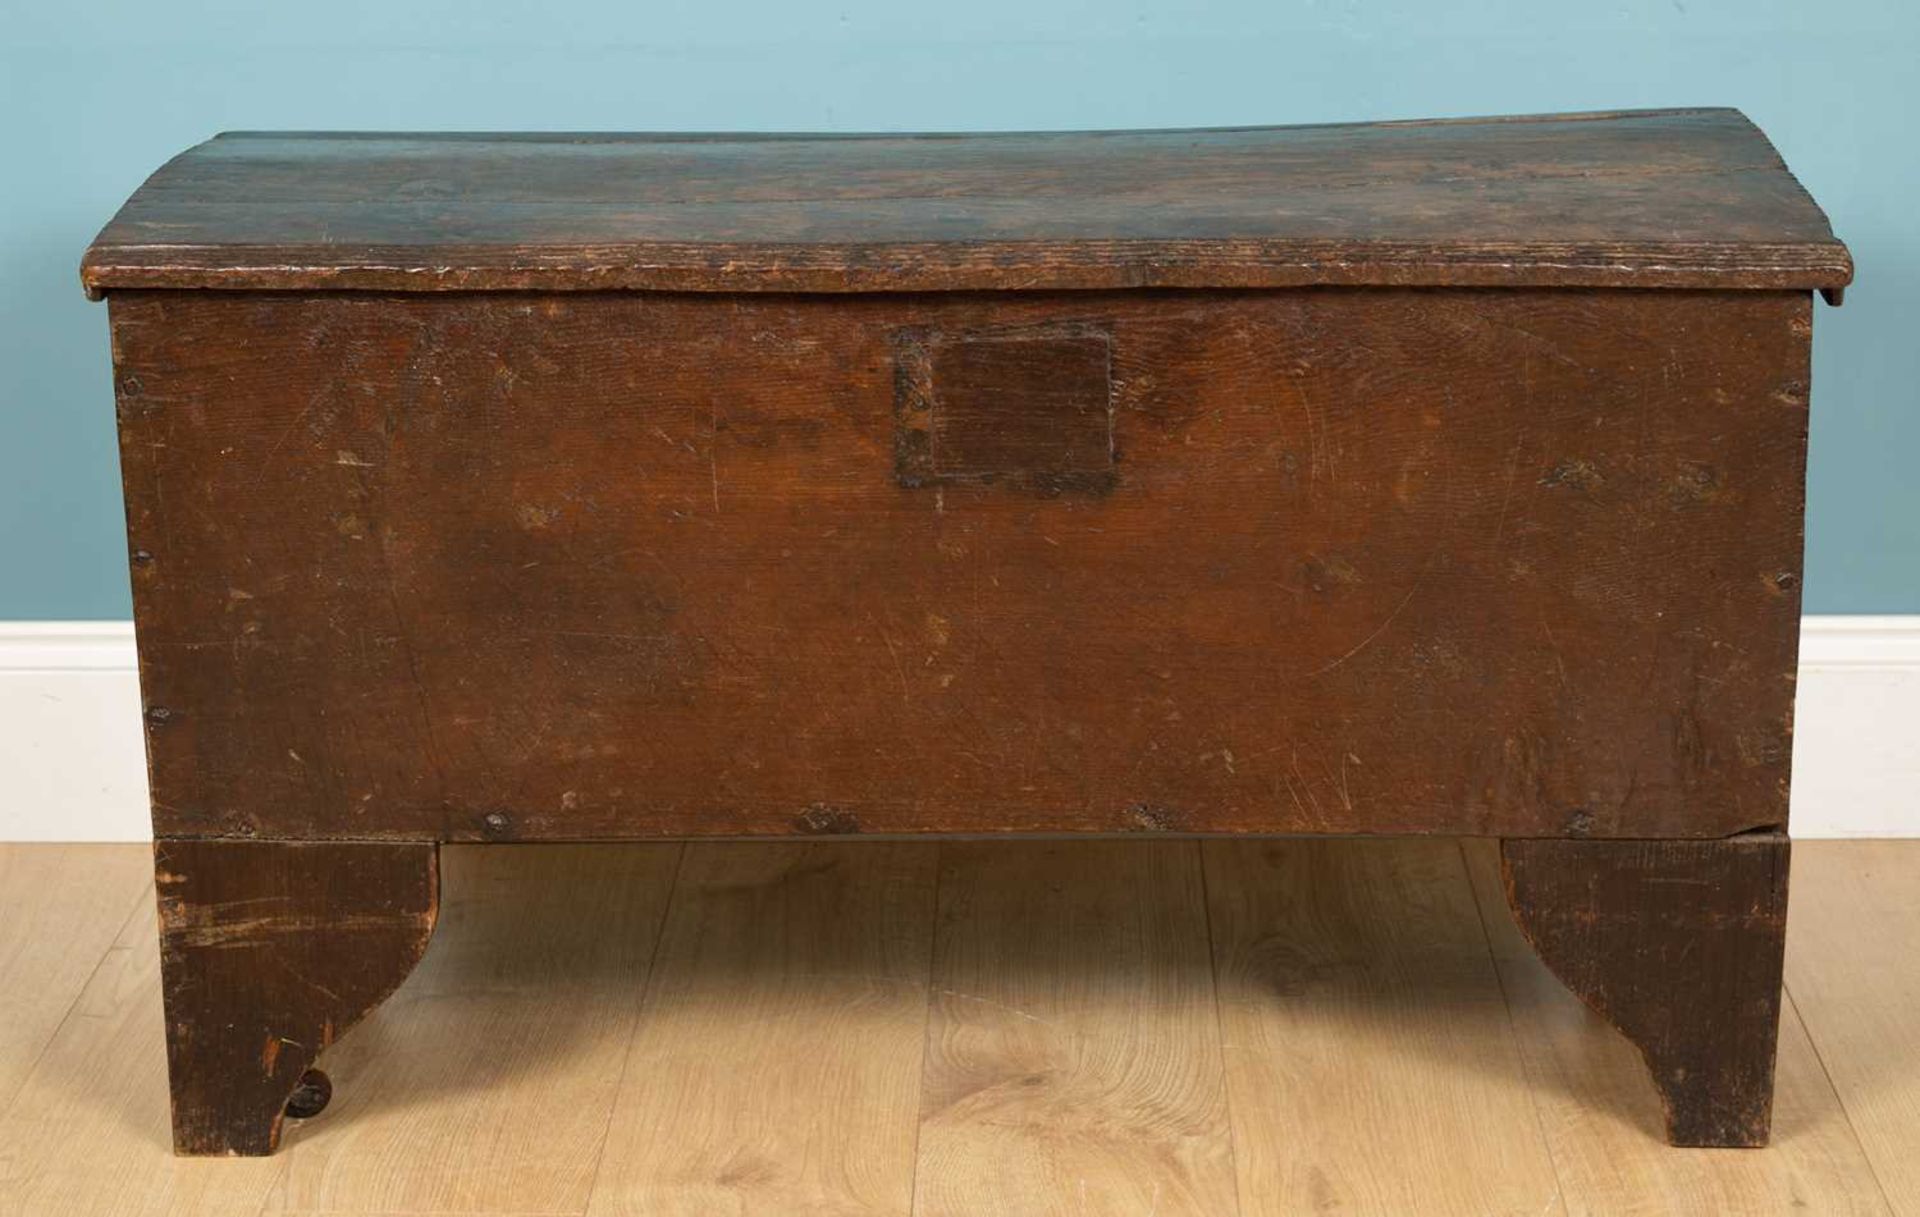 An antique oak six plank chest or coffer